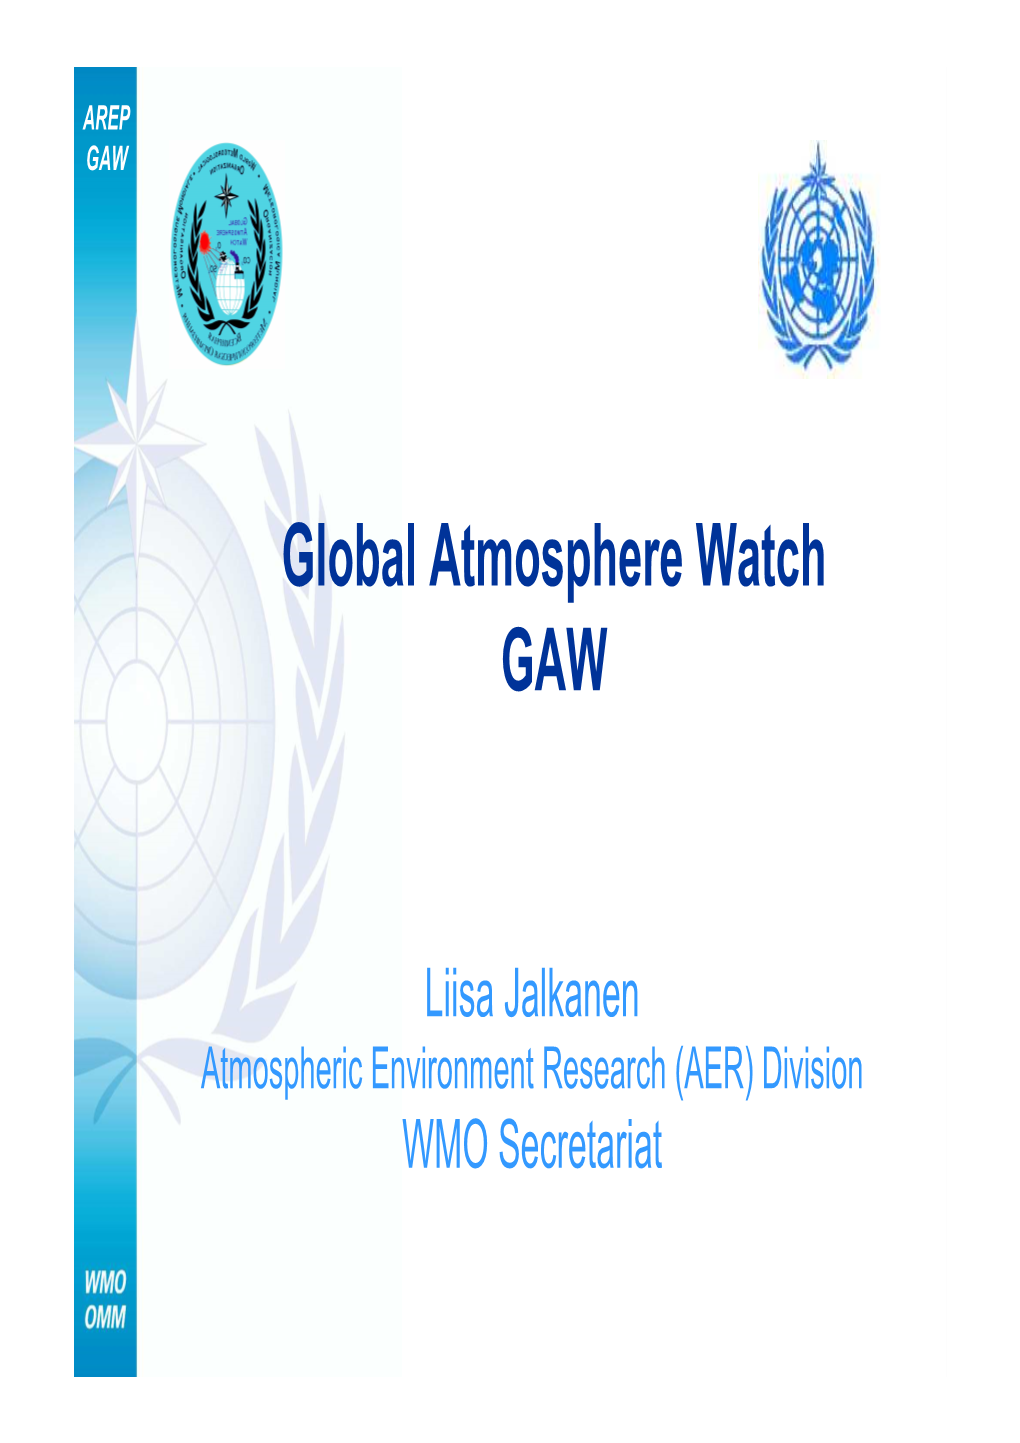 Global Atmosphere Watch GAW